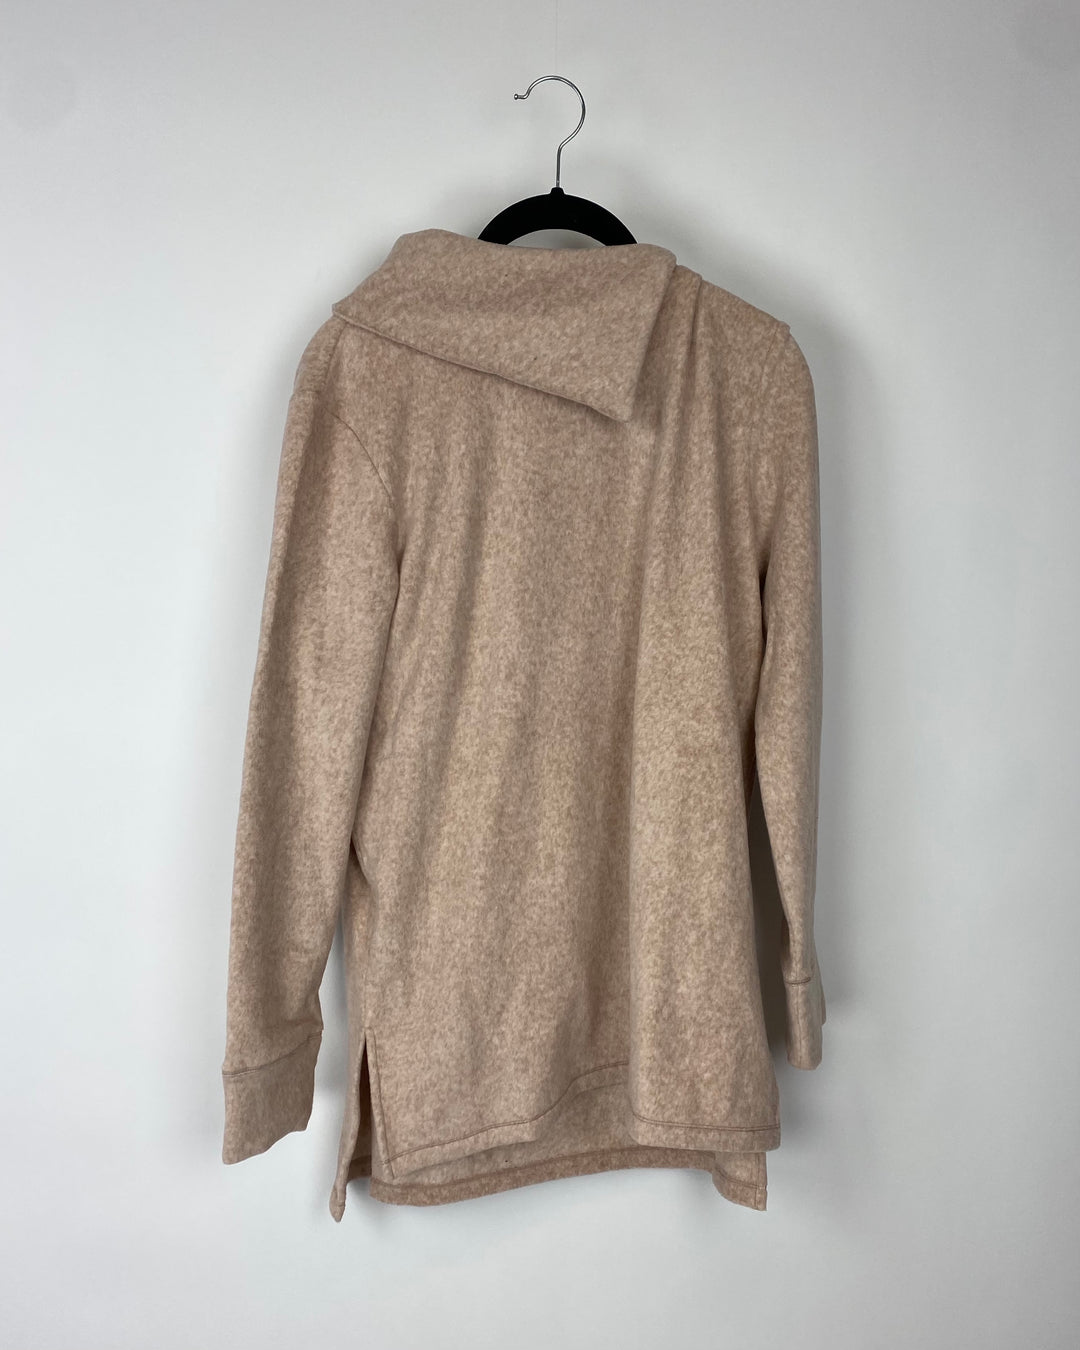 Tan Fleece Long Sleeve Top - Size 6/8